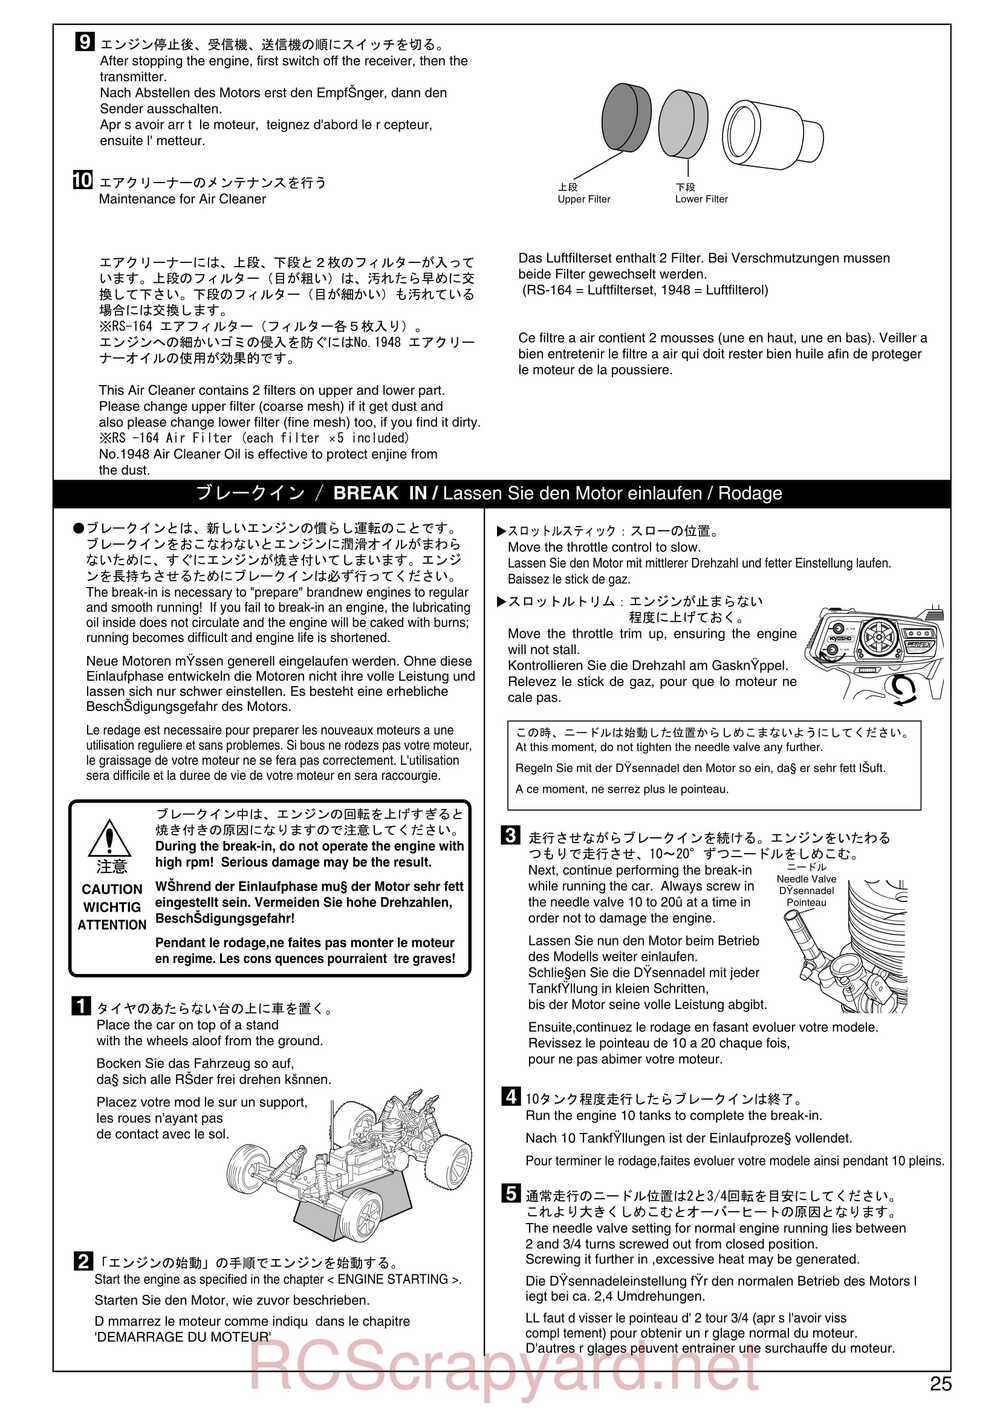 Kyosho - 31092 - GP Ultima RB Racing Sports - Manual - Page 25